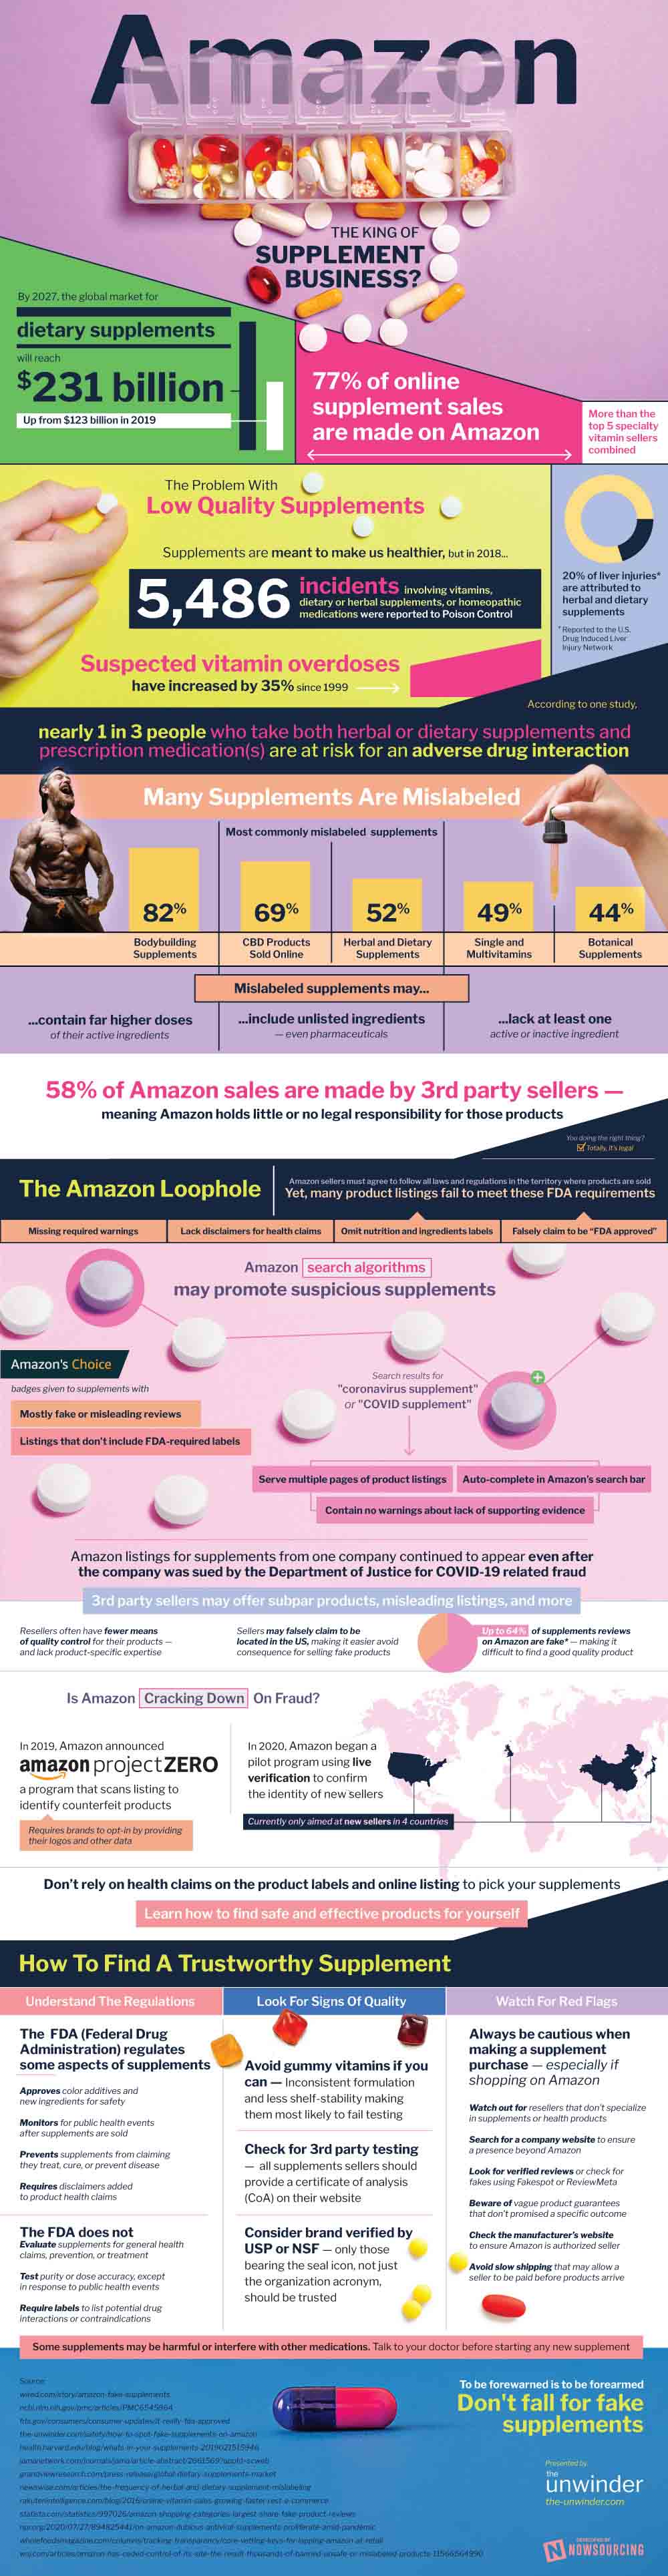 Amazon Supplement Business